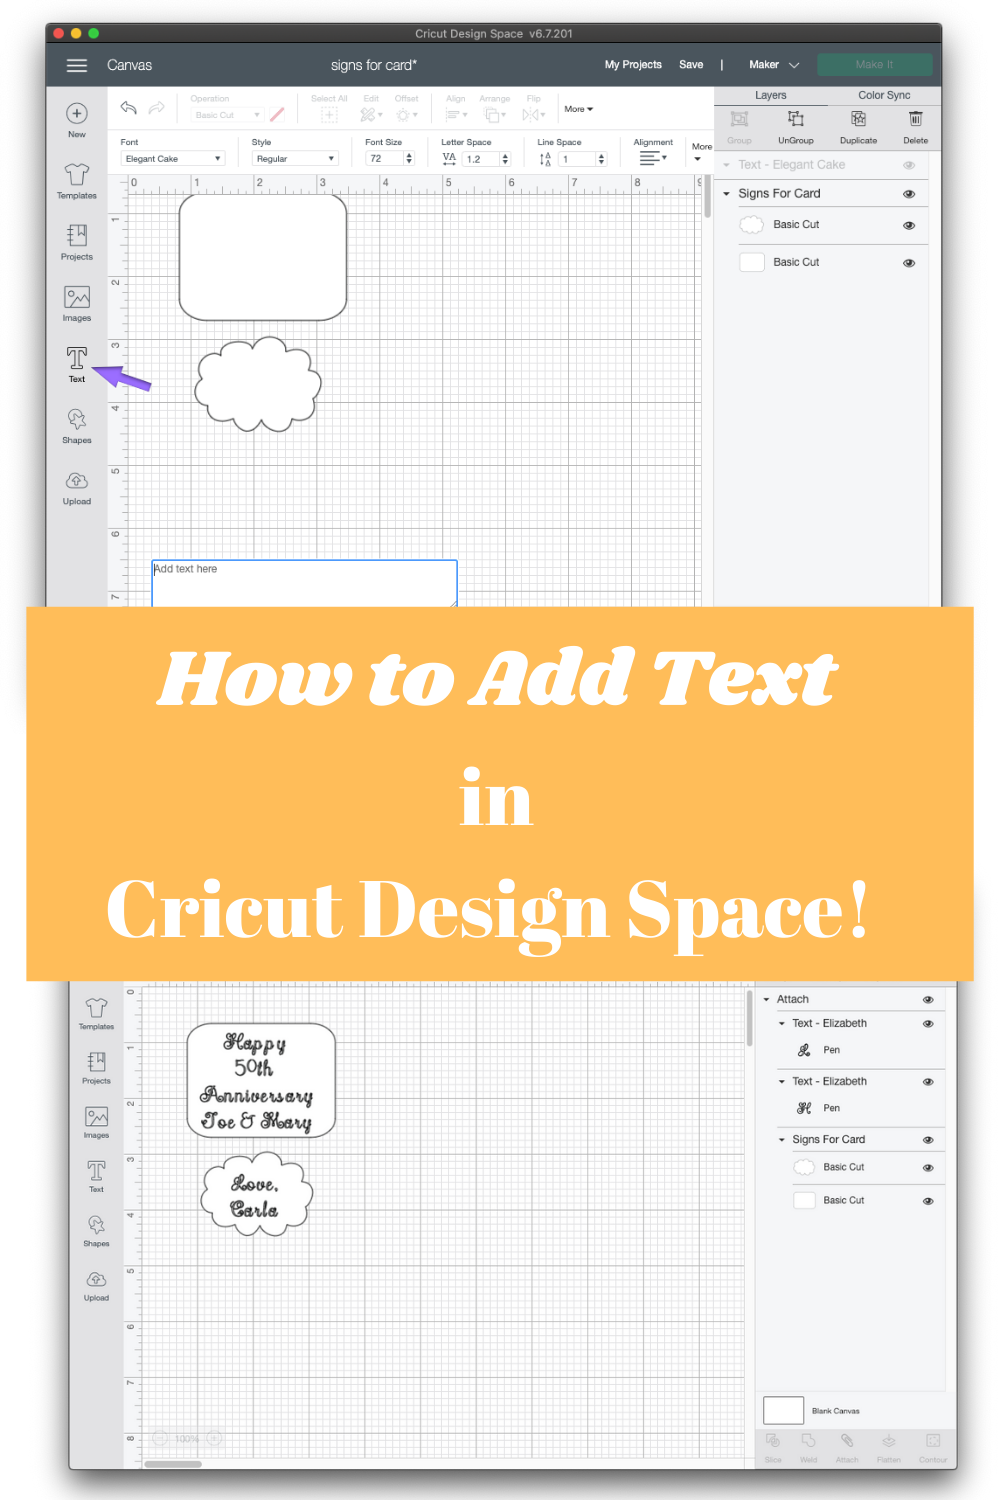 Adding Text in Cricut Design Space